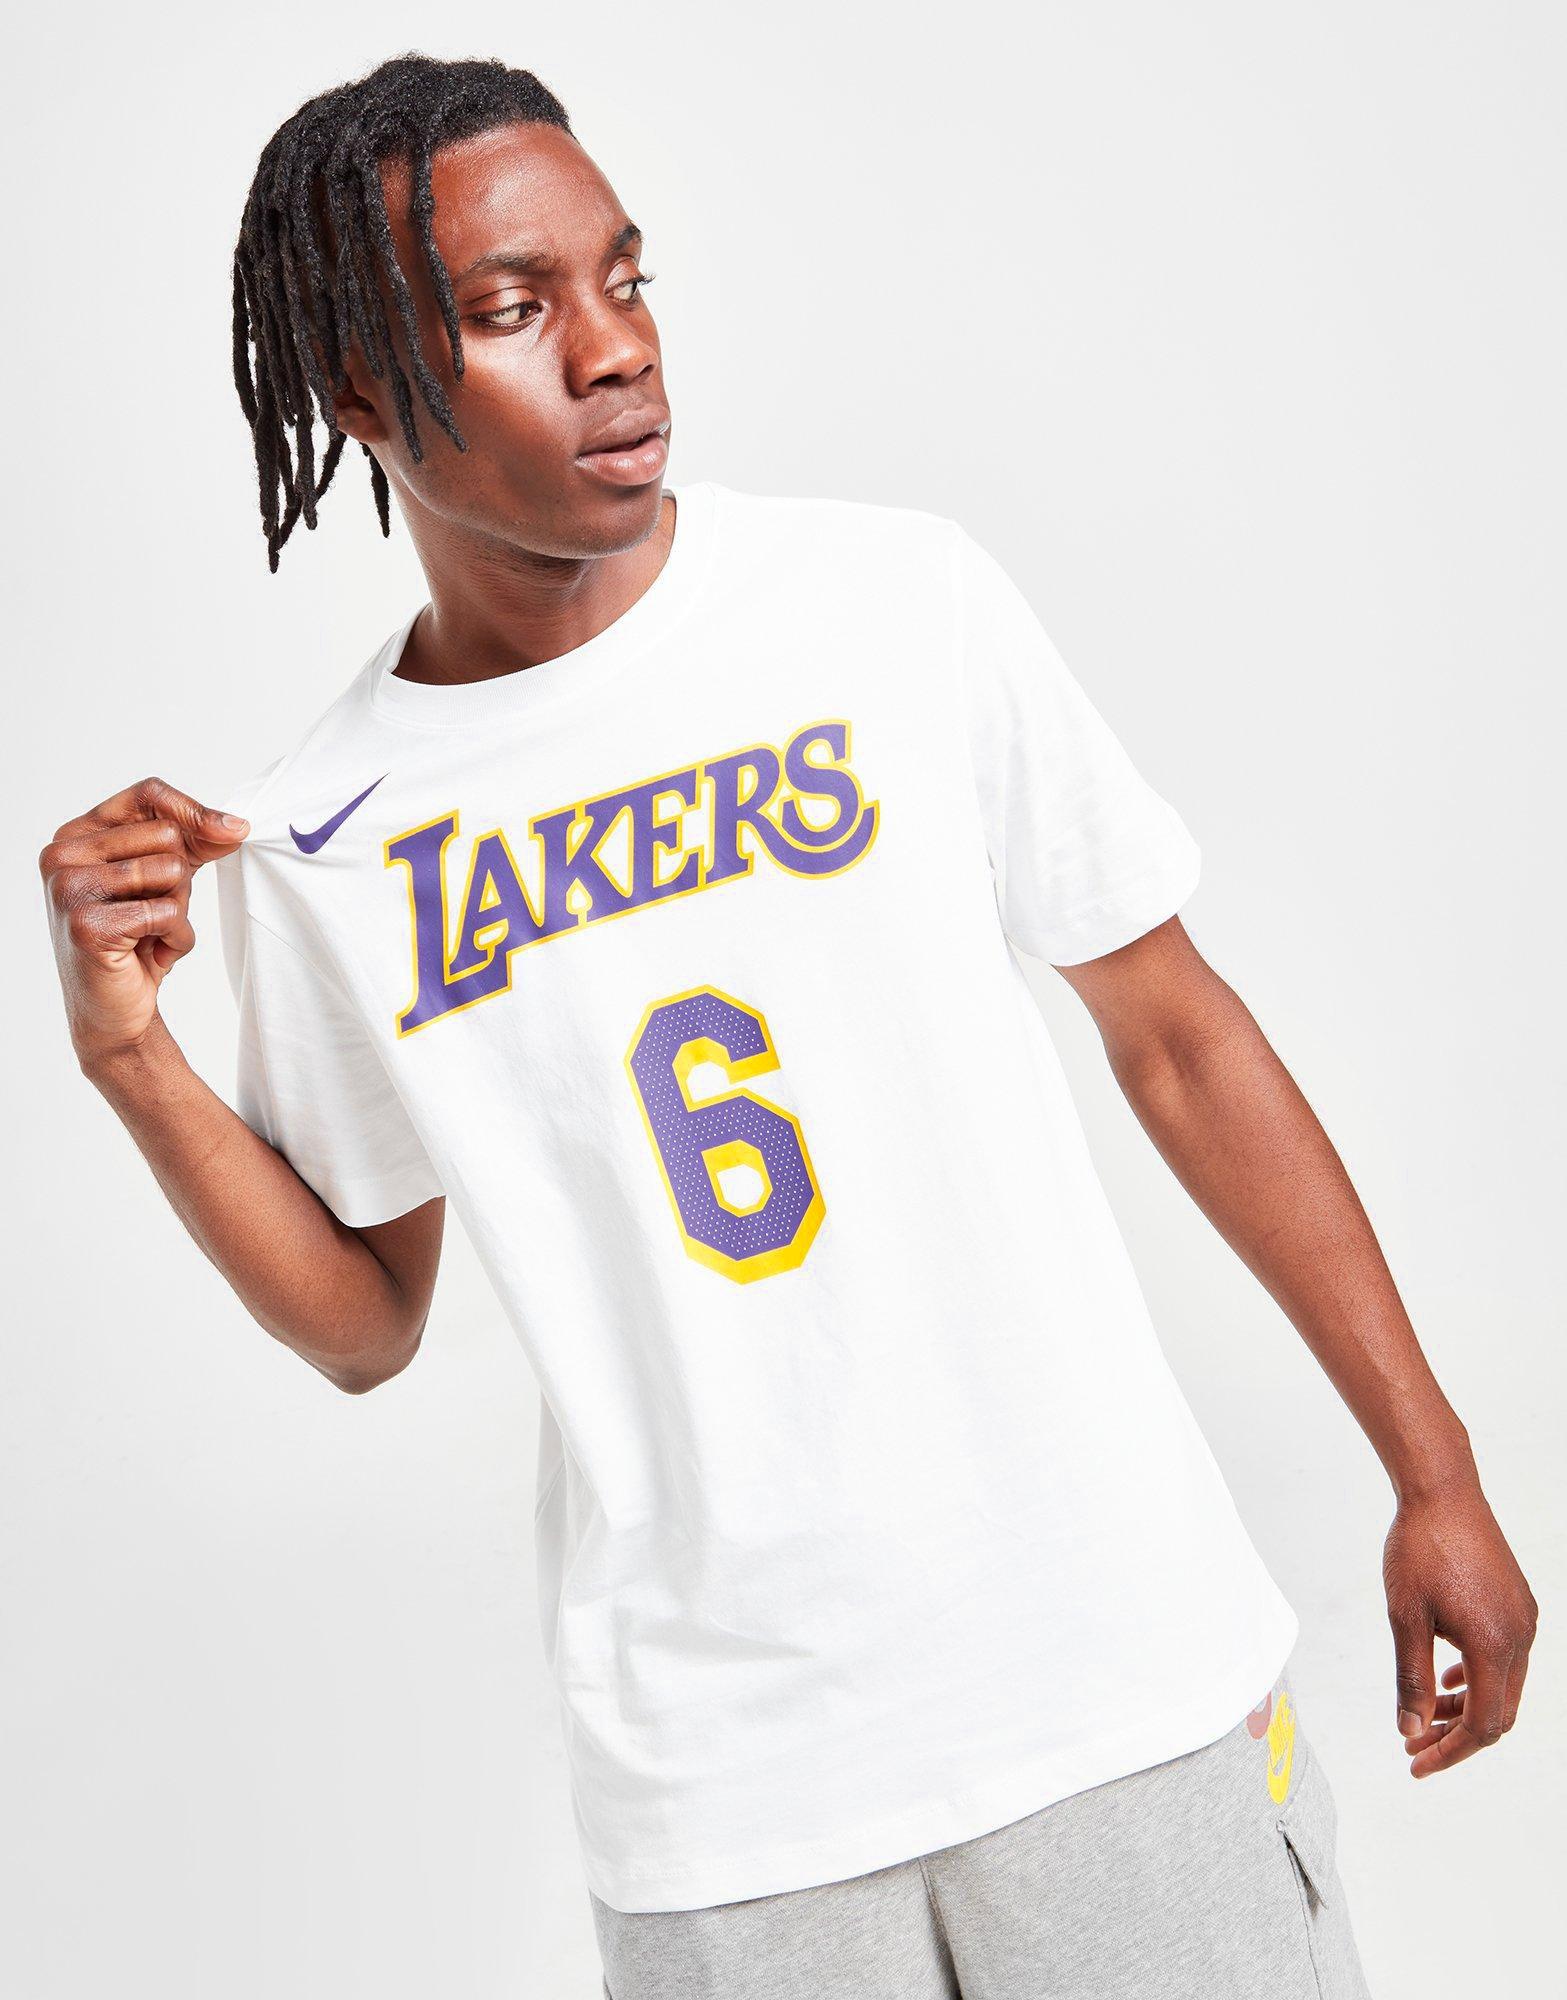 Lebron James 6 Los Angeles Lakers Flat Replica Kids T-Shirt